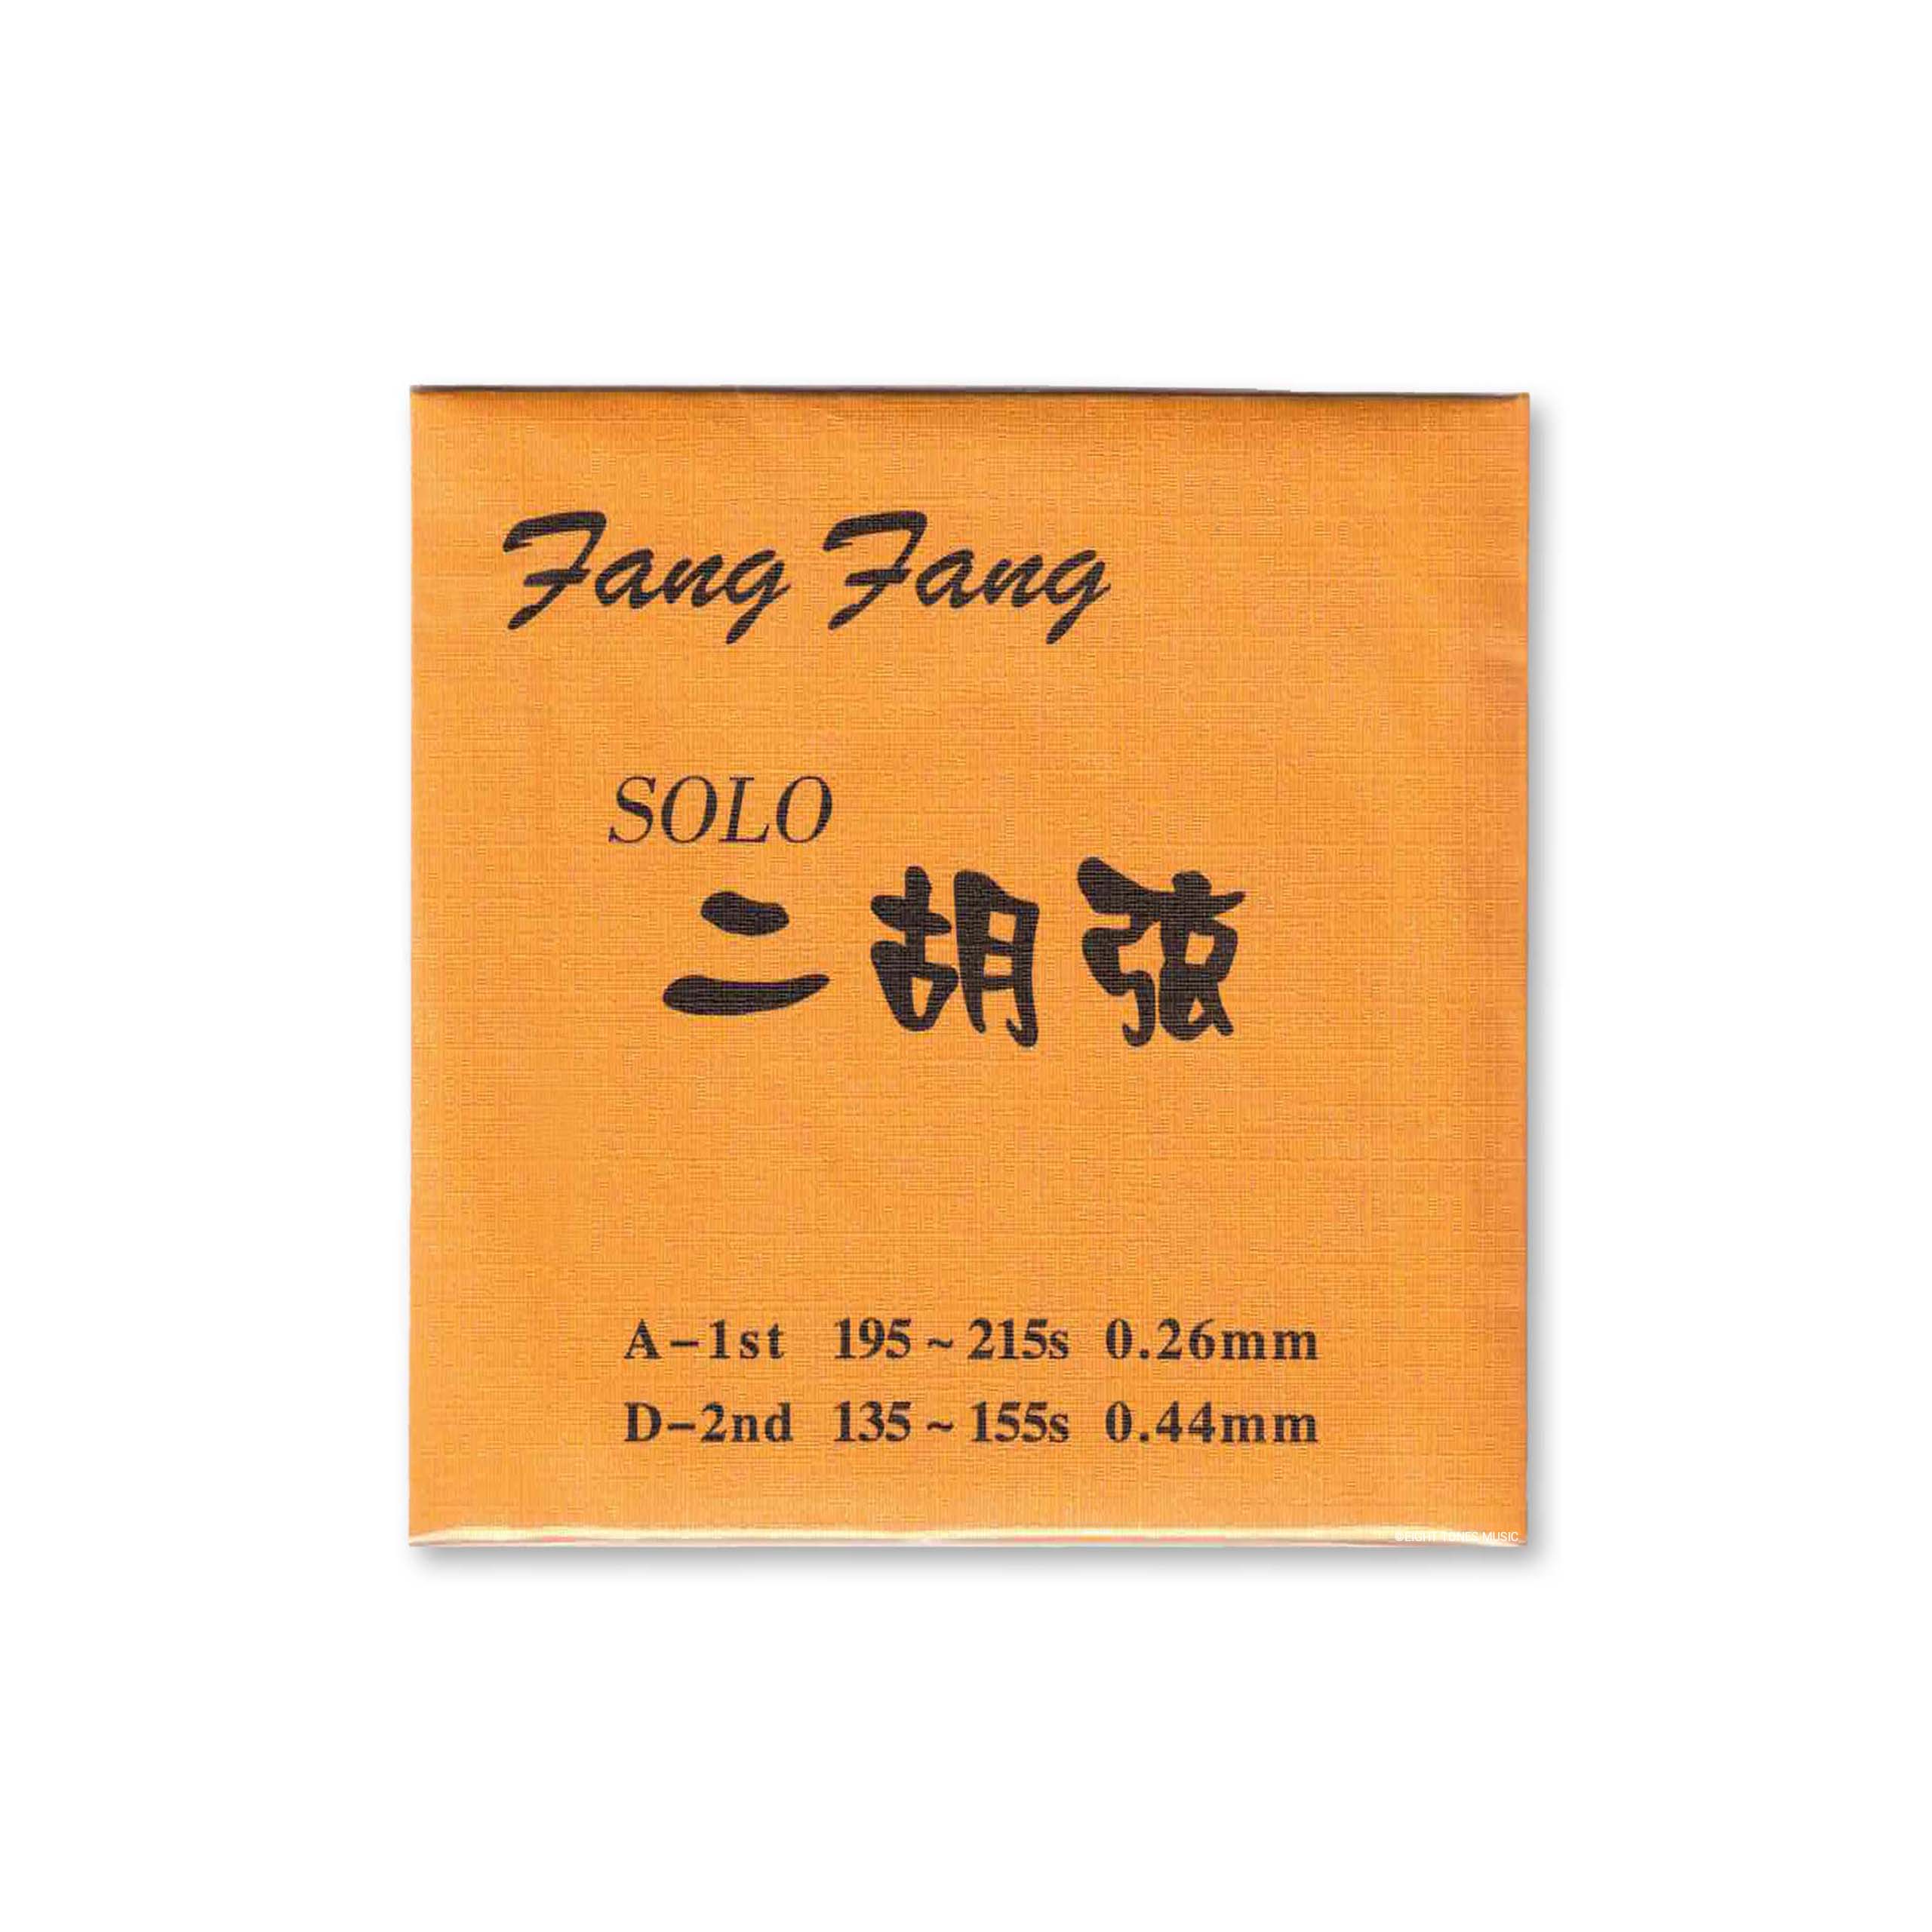 Fang Fang Gold Solo Erhu Strings (Set) front